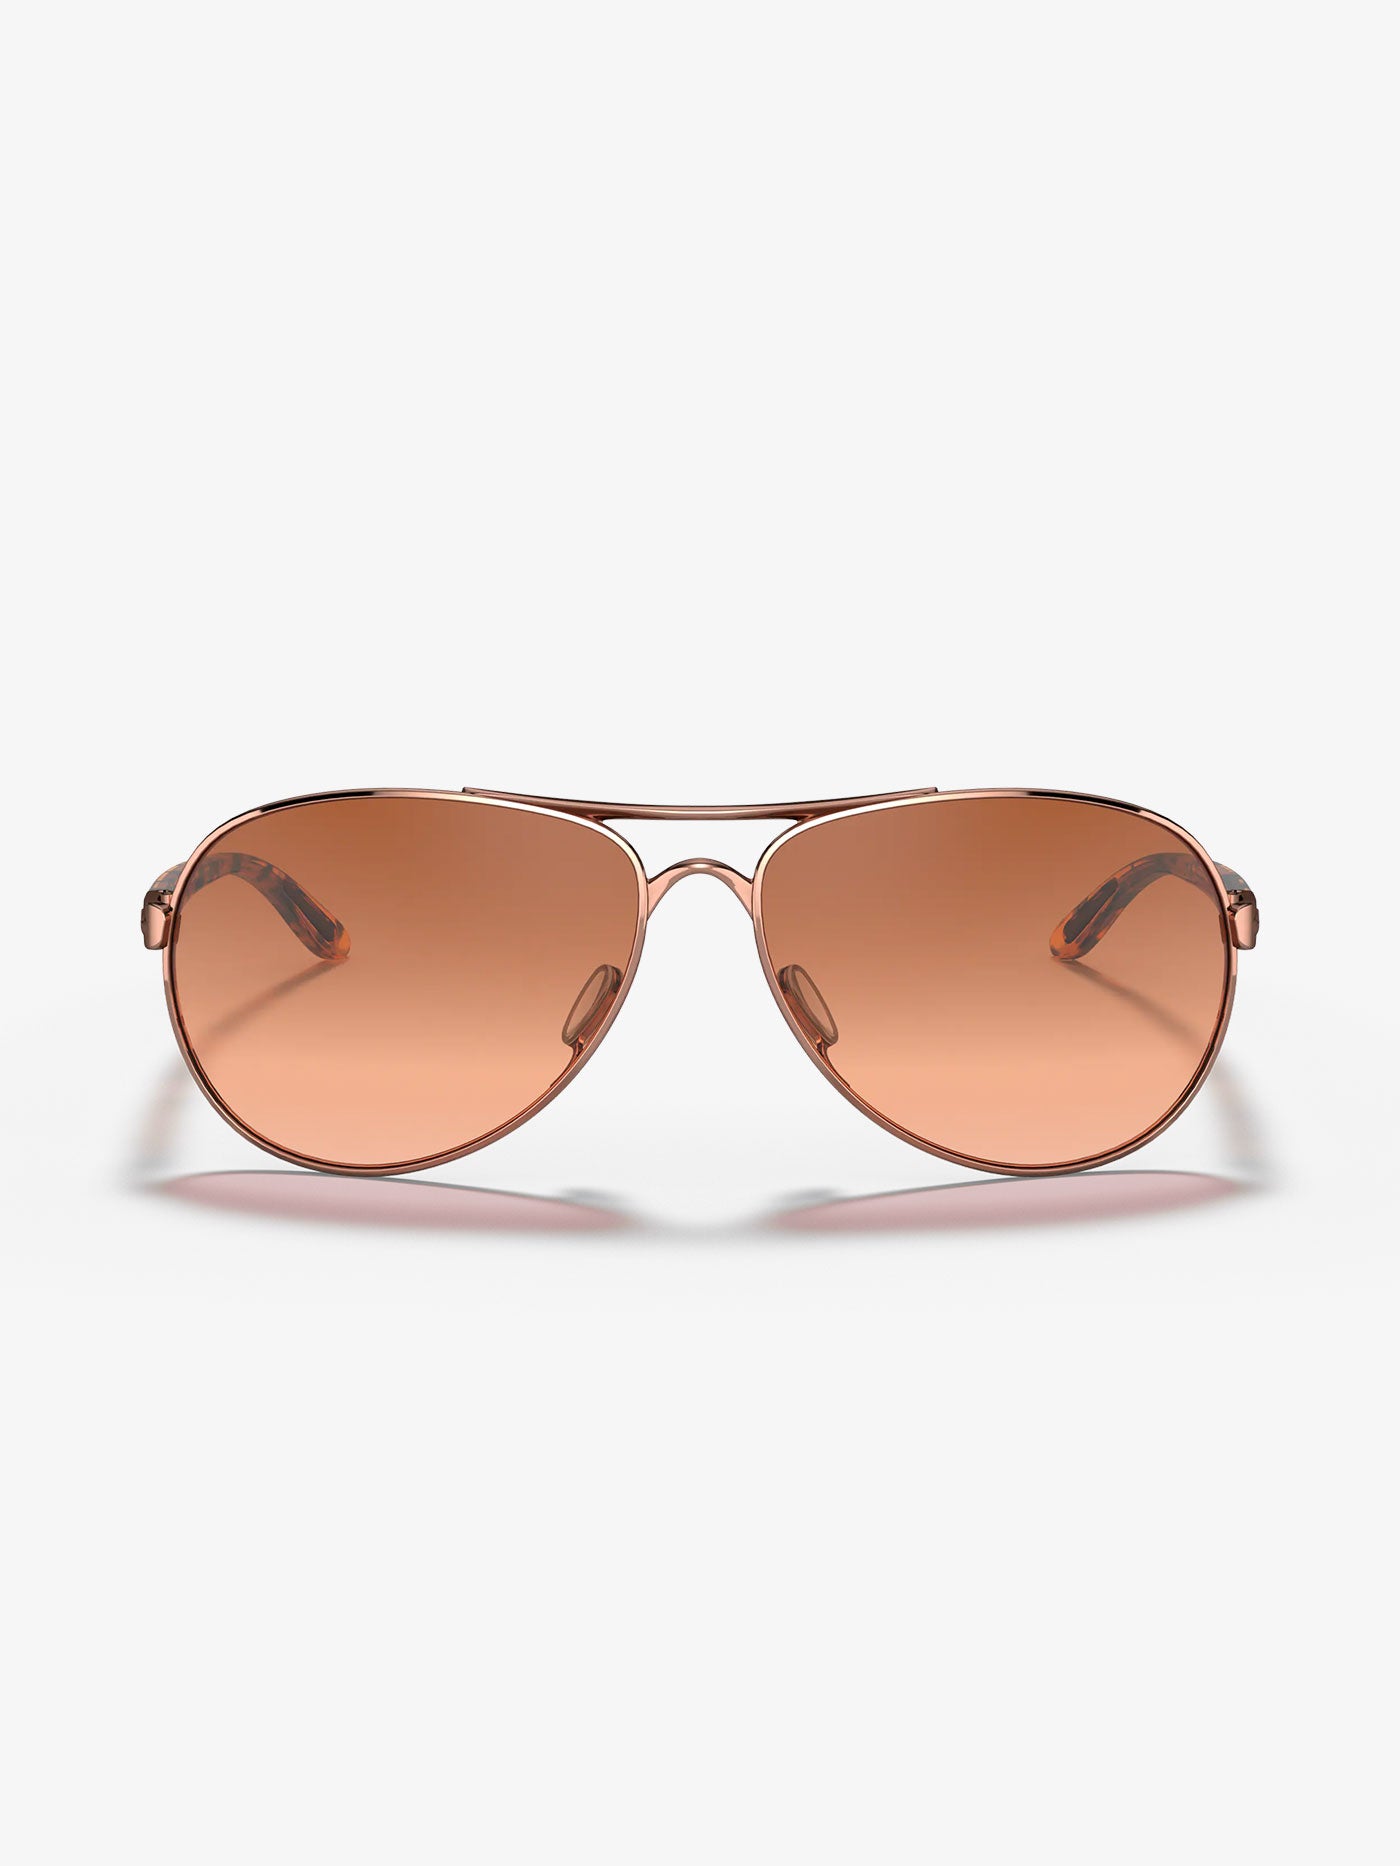 Oakley Feedback Rose Gold Brown Gradient Sunglasses